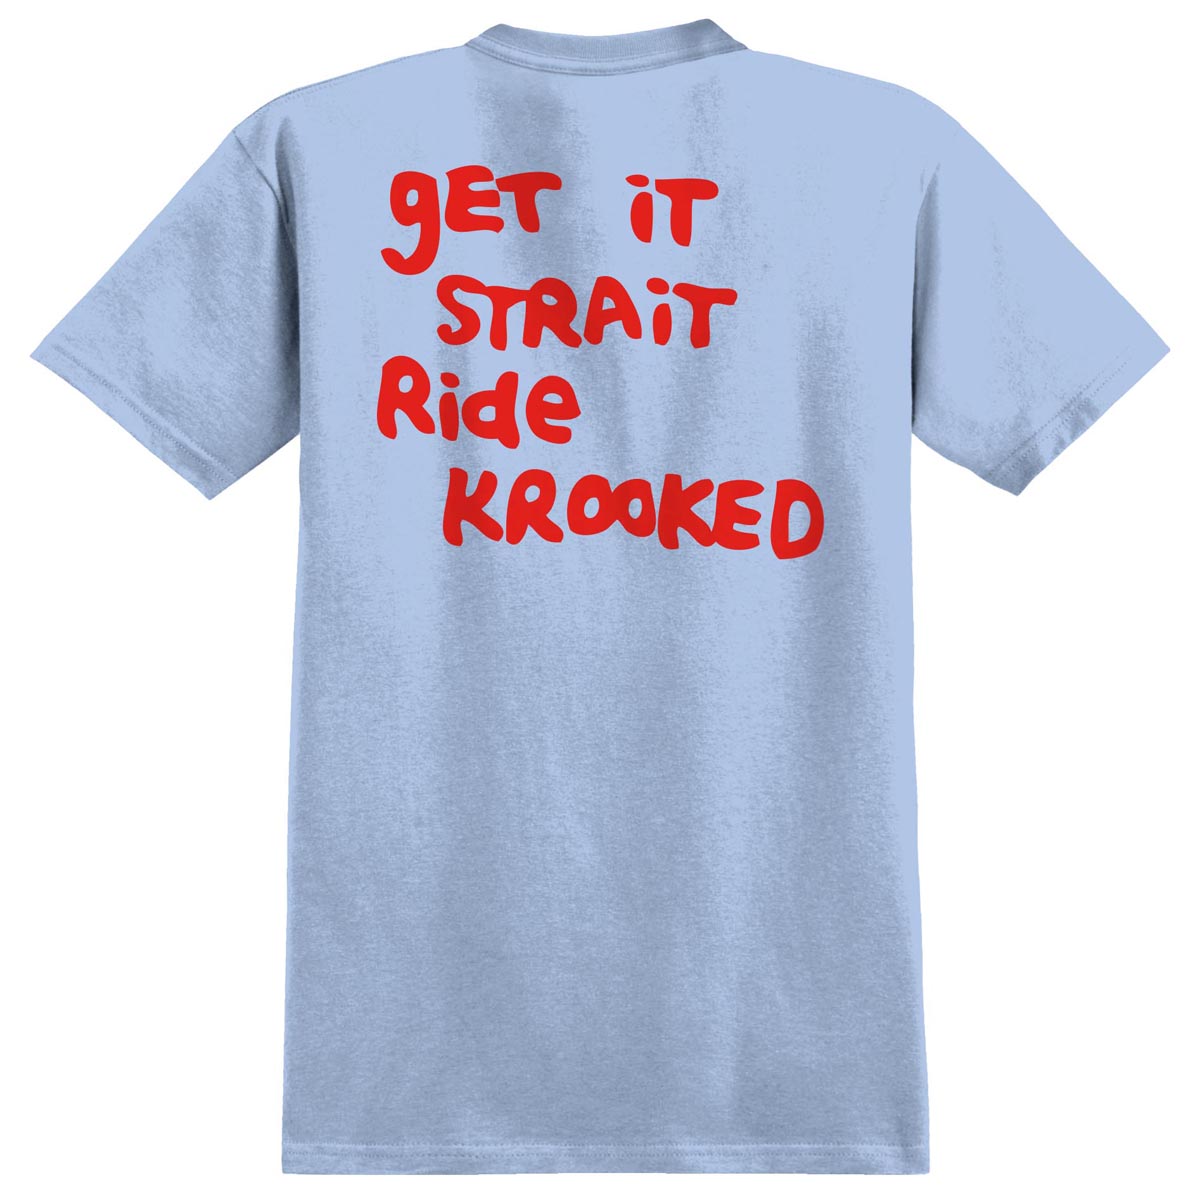 Krooked Strait Eyes T-Shirt - Light Blue/Red image 1